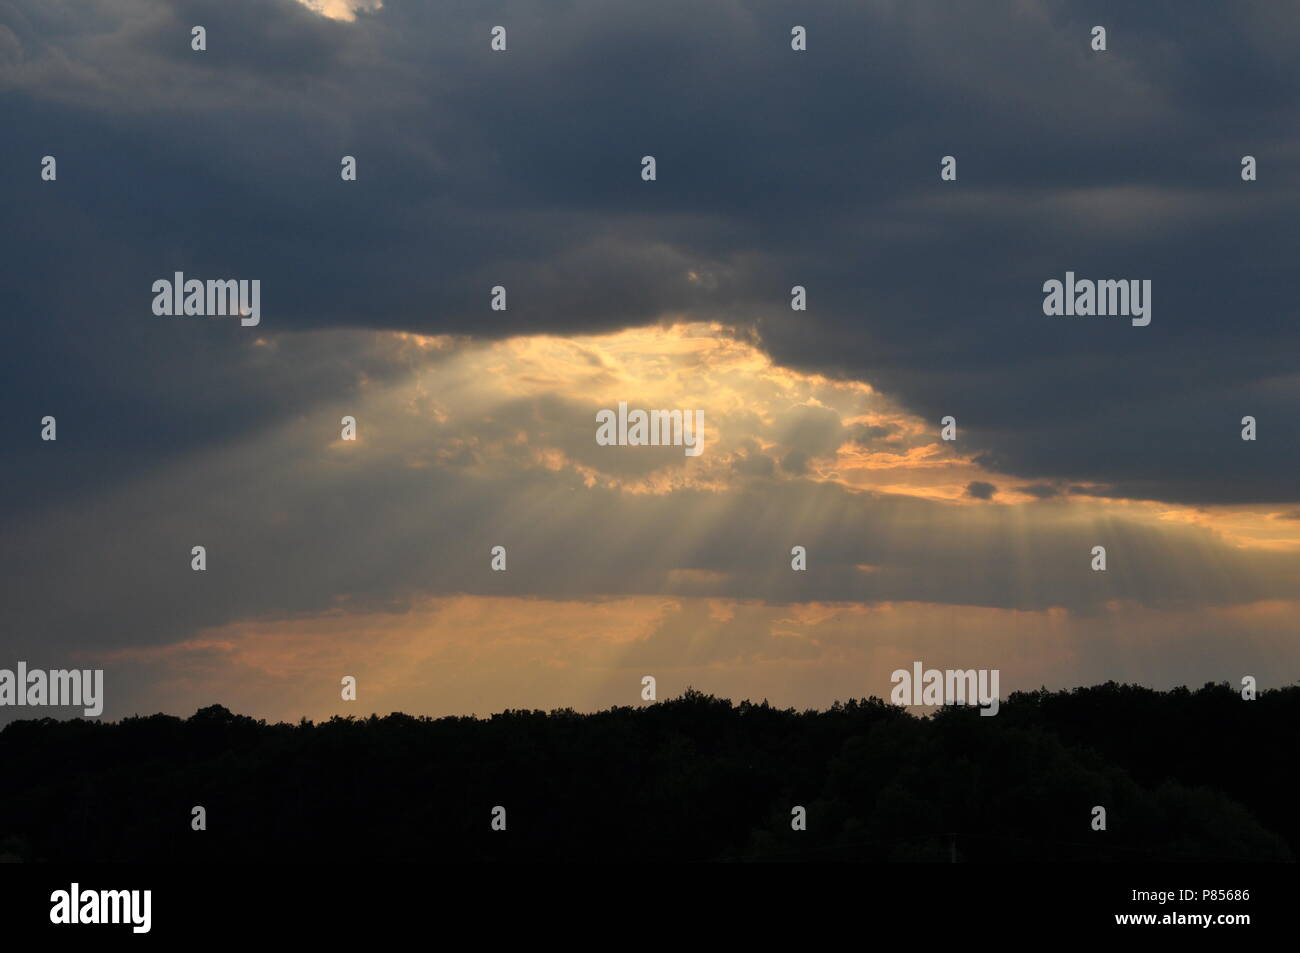 Sonnenuntergang mit Wolken, Wetter, Himmel. Stockfoto